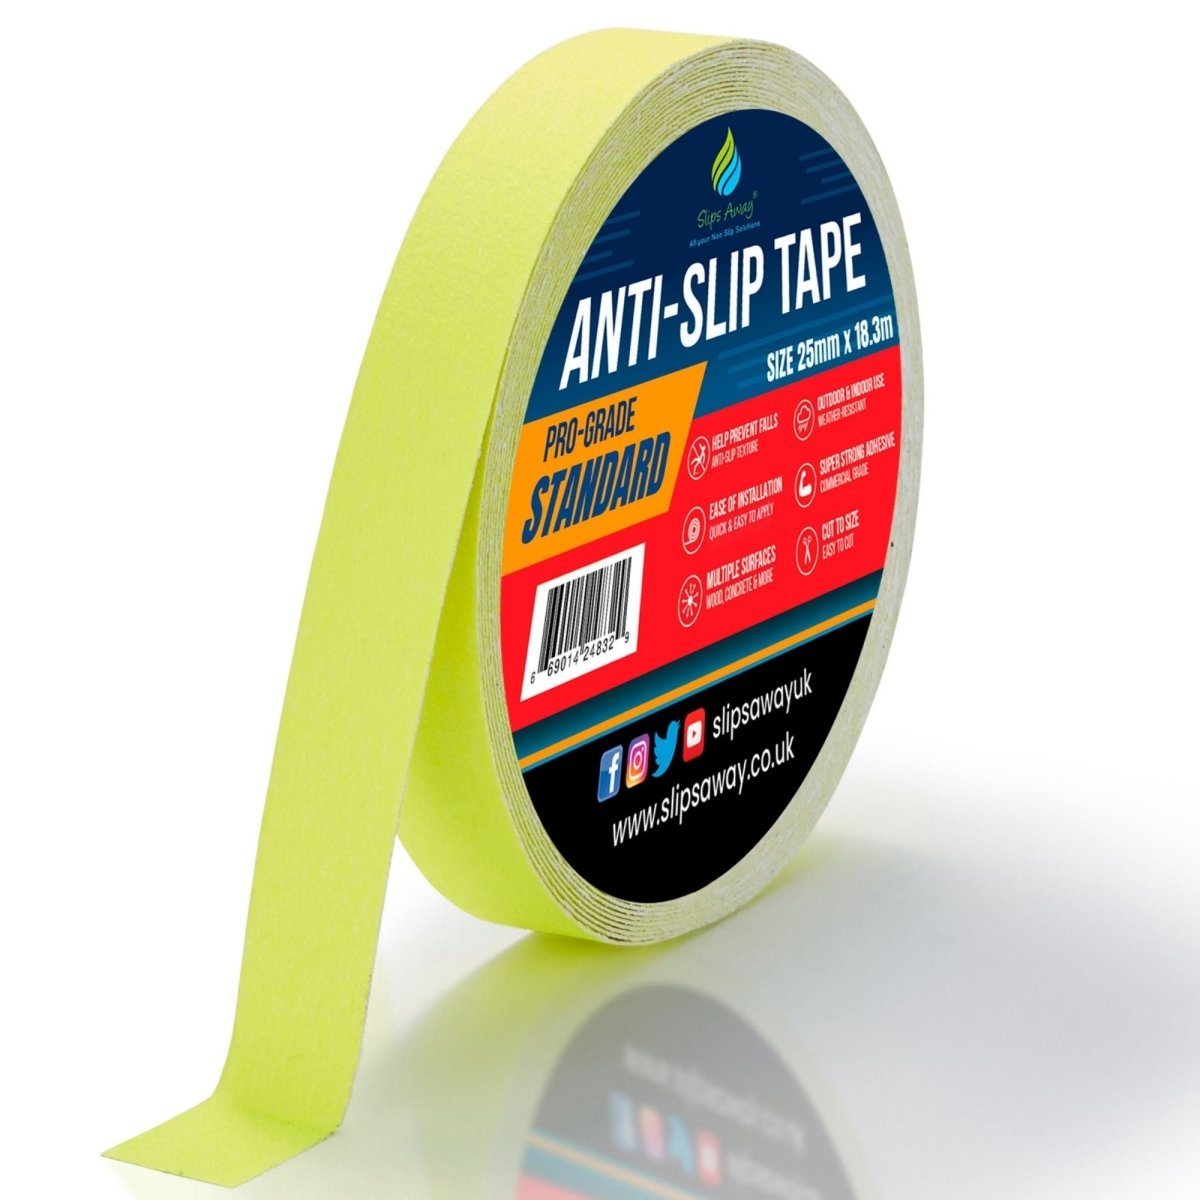  fluorescent yellow Anti Slip Tape Rolls Standard Grade - Slips Away - Anti slip tape - 25mm x 18.3m